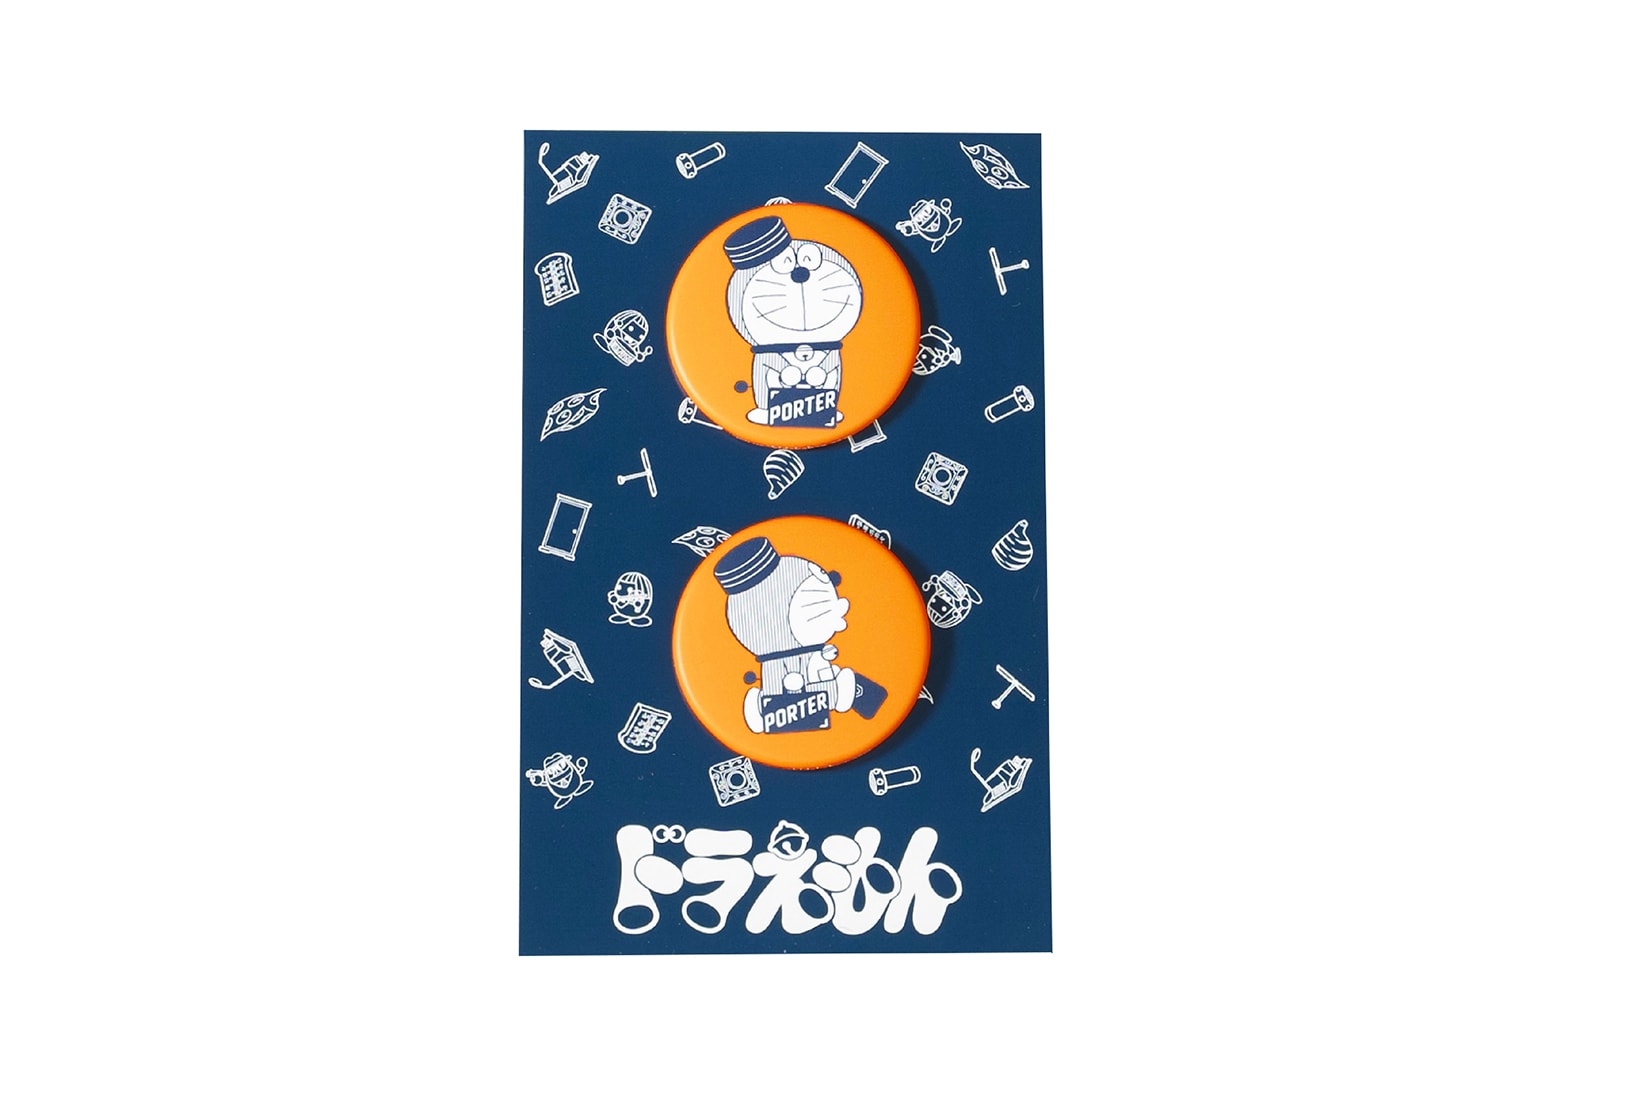 Doraemon x PORTER Bag Collaboration Collection Wallet